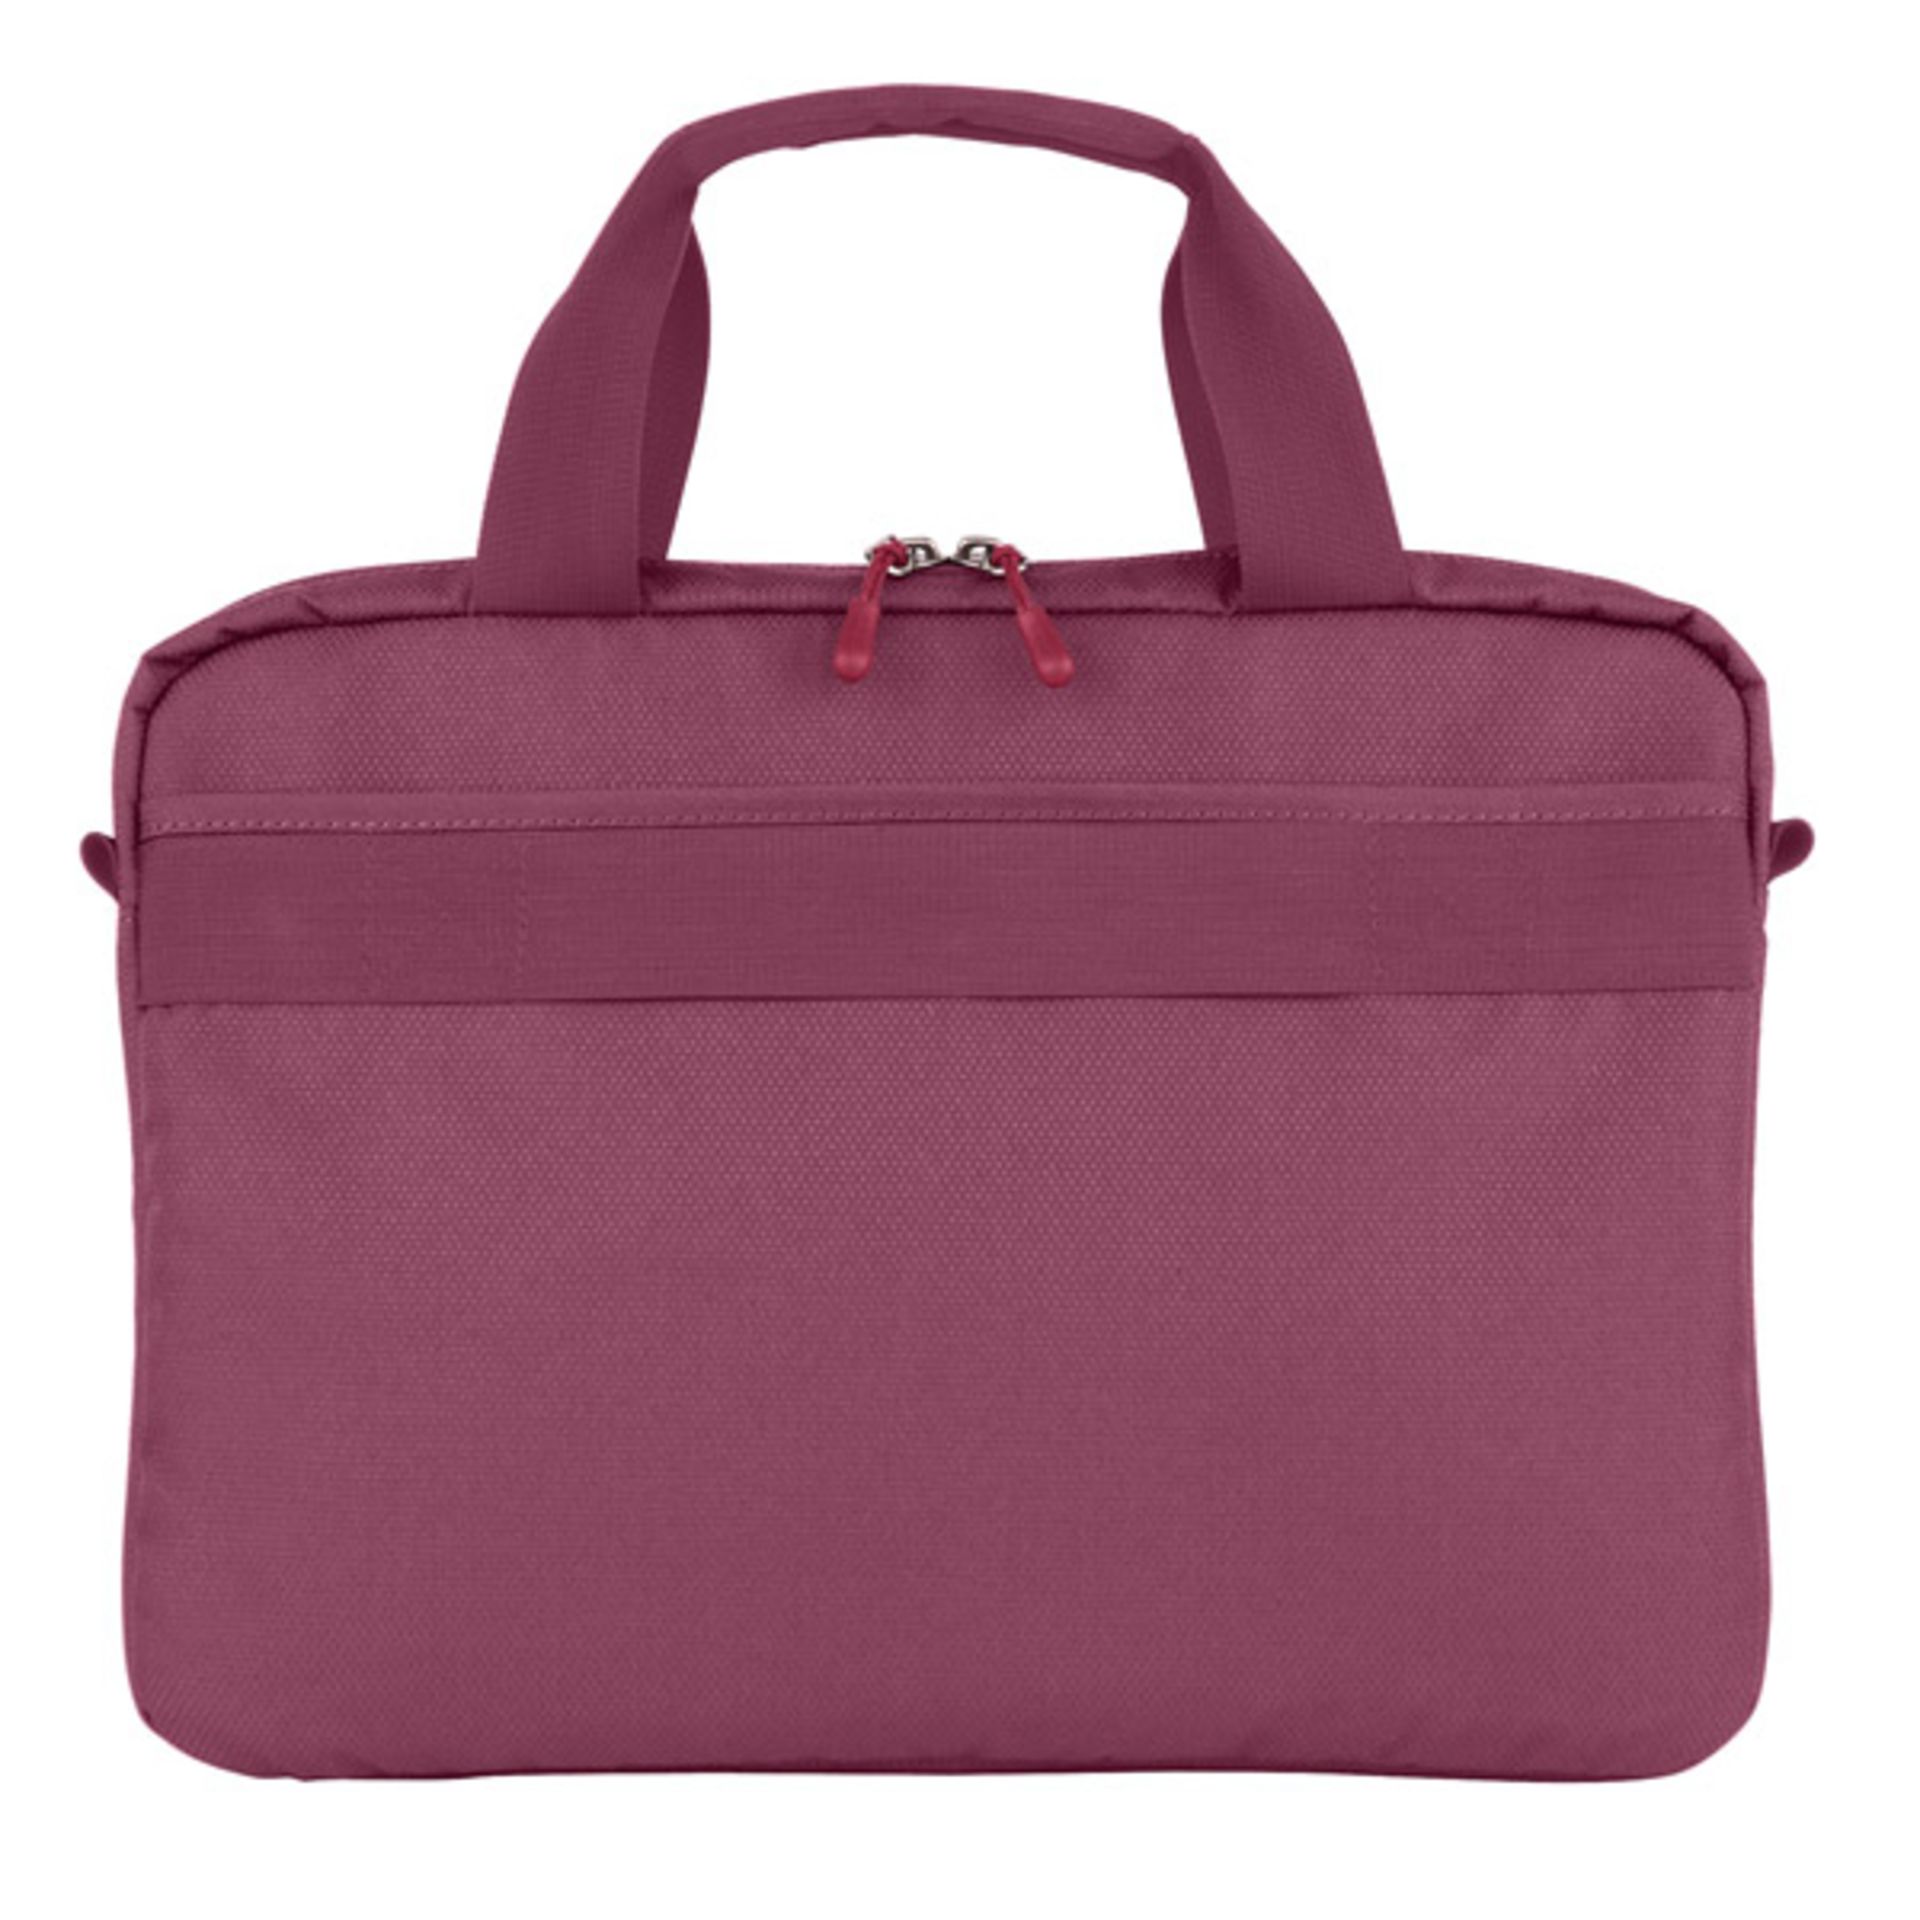 + VAT Brand New Medium Shoulder Bag - RRP Â£42.99 Amazon Price Â£33.57 - For Laptop/Tablet Up To - Image 3 of 3